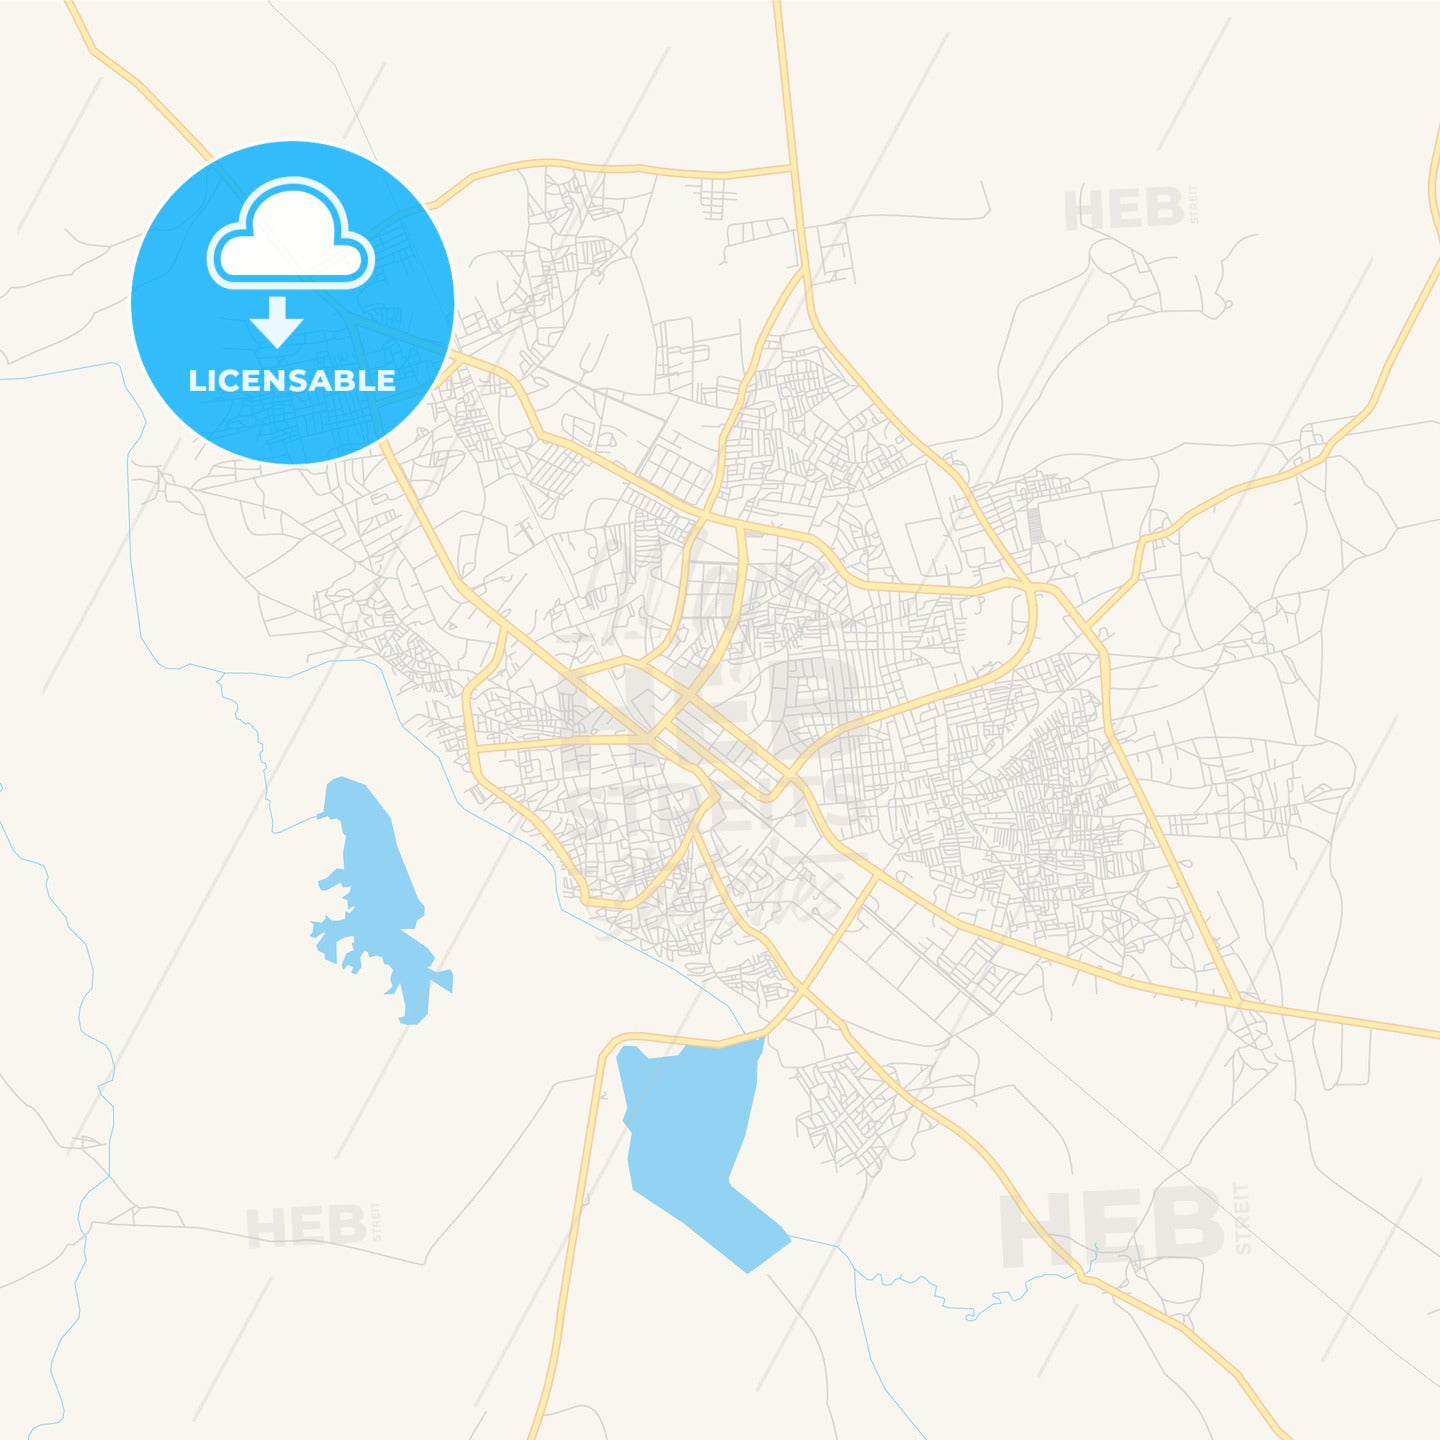 Printable street map of Gusau, Nigeria